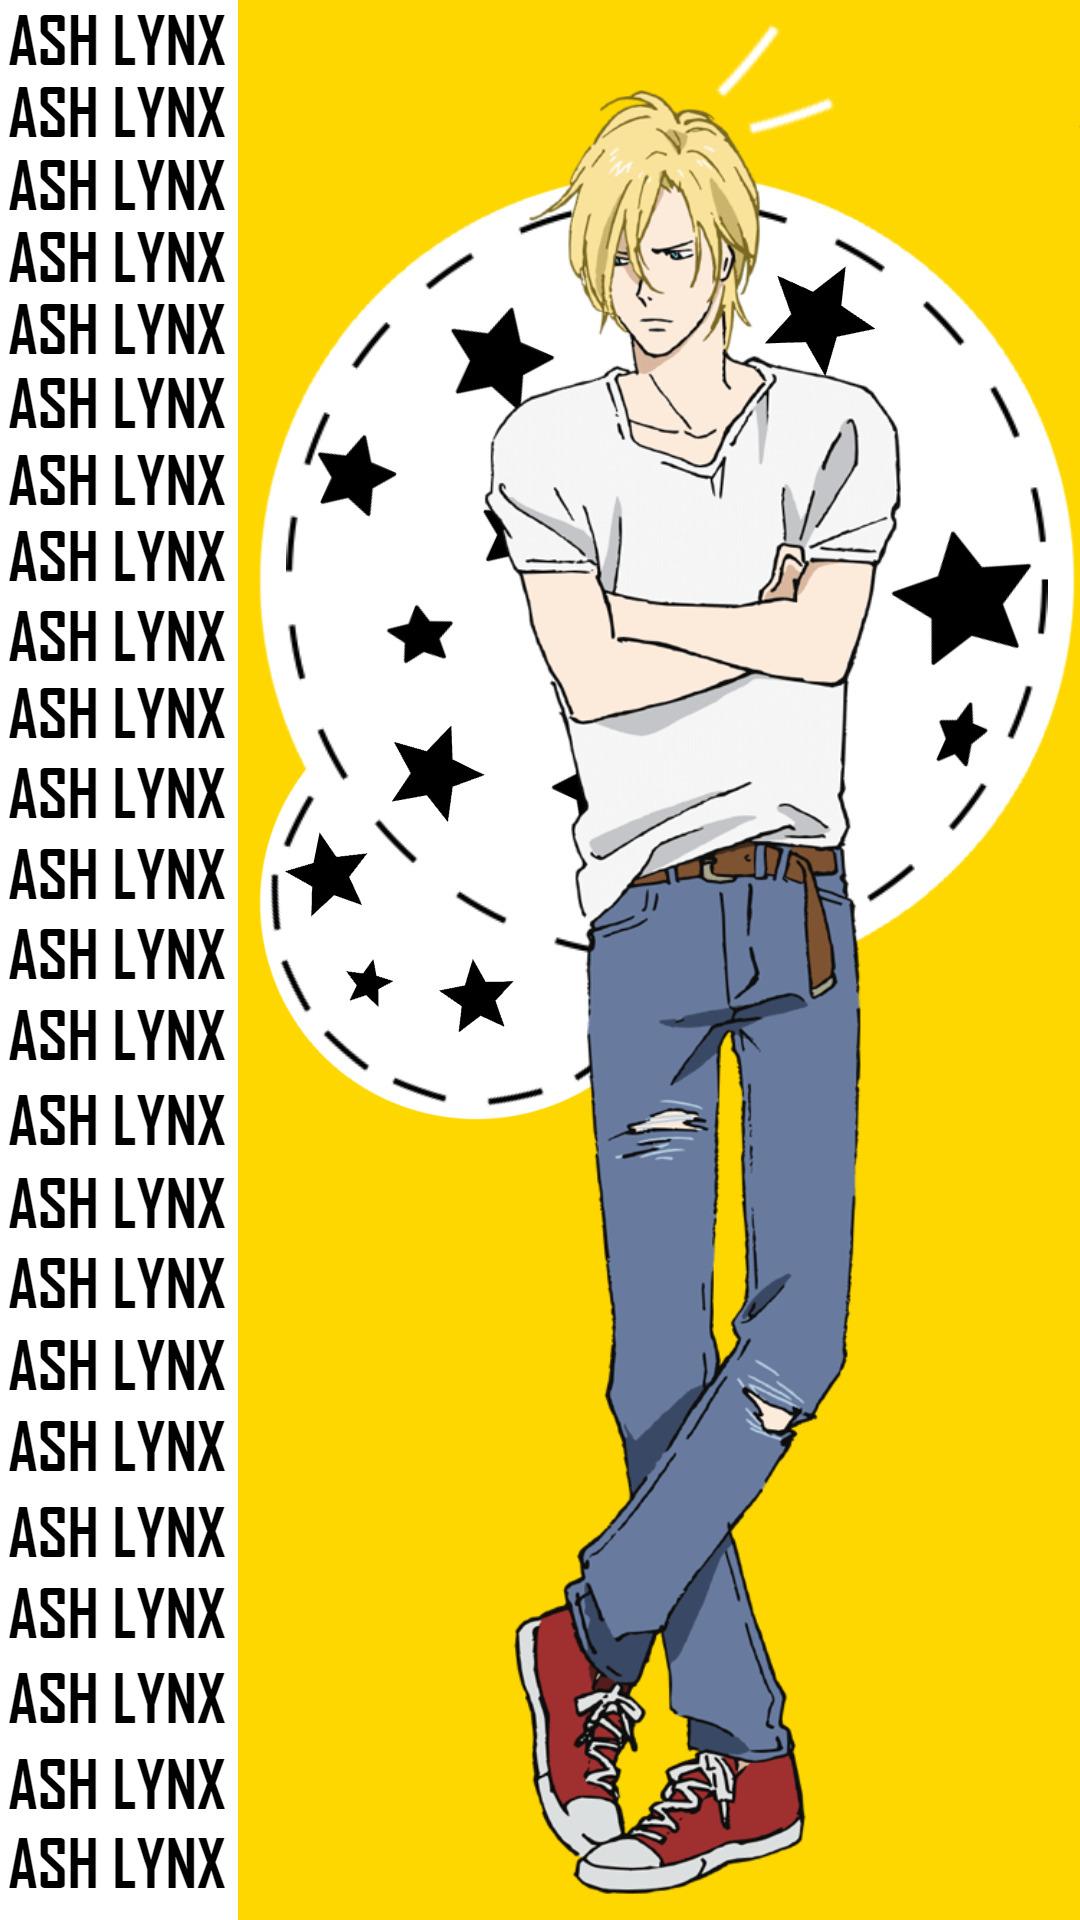 ash lynx wallpaper